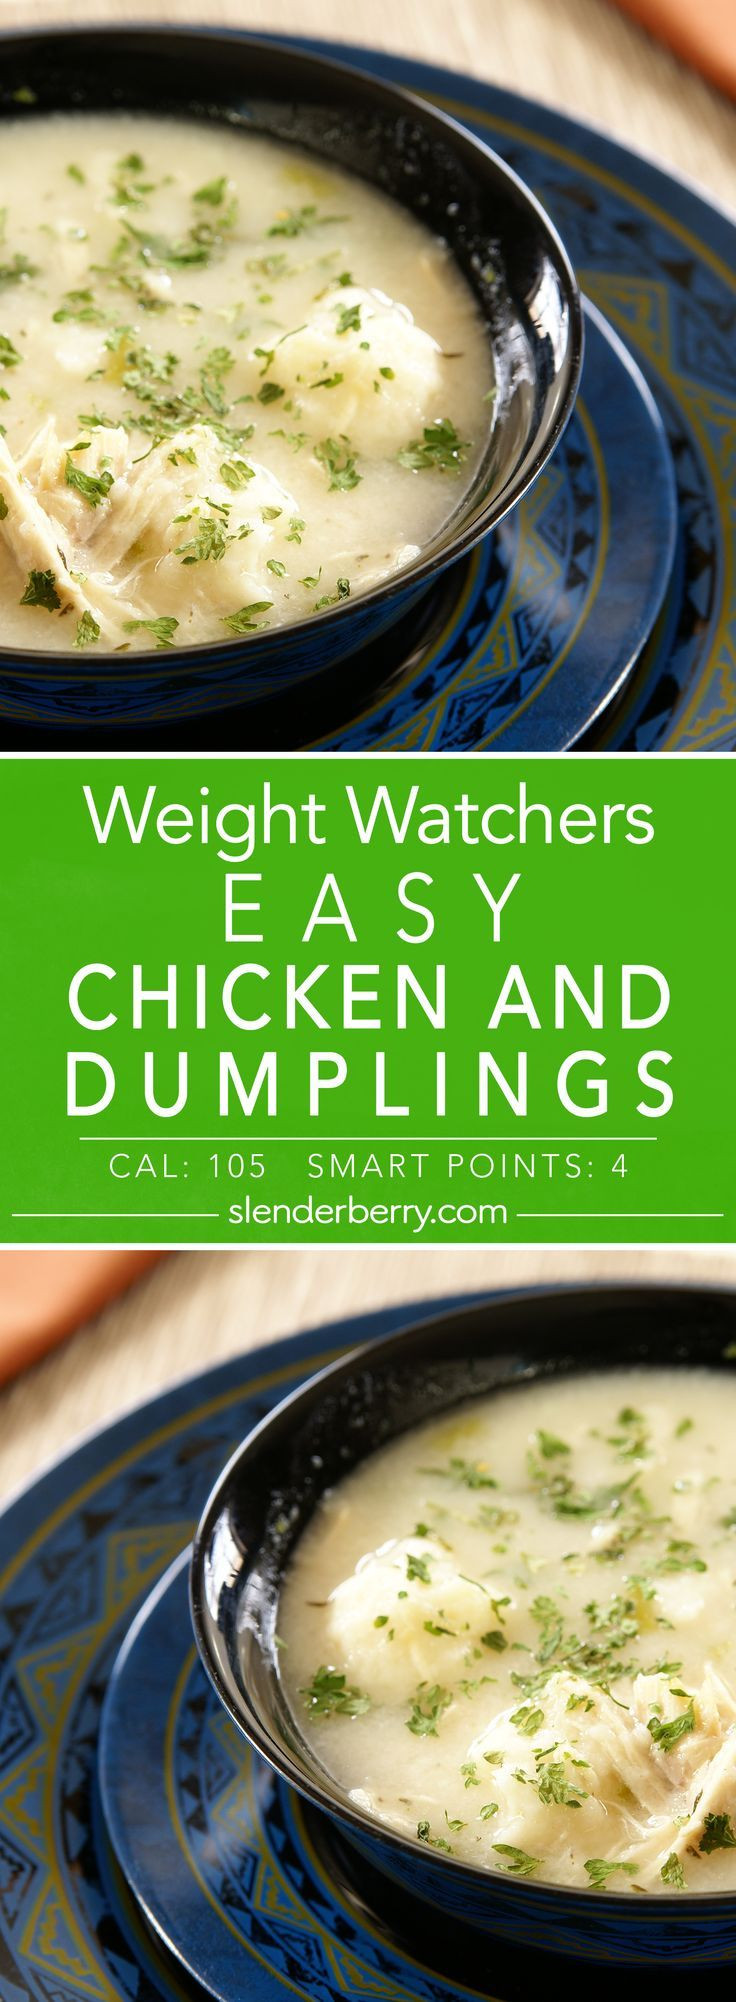 Weight Watchers Chicken And Dumplings
 Easy Chicken and Dumplings Recipe in 2020